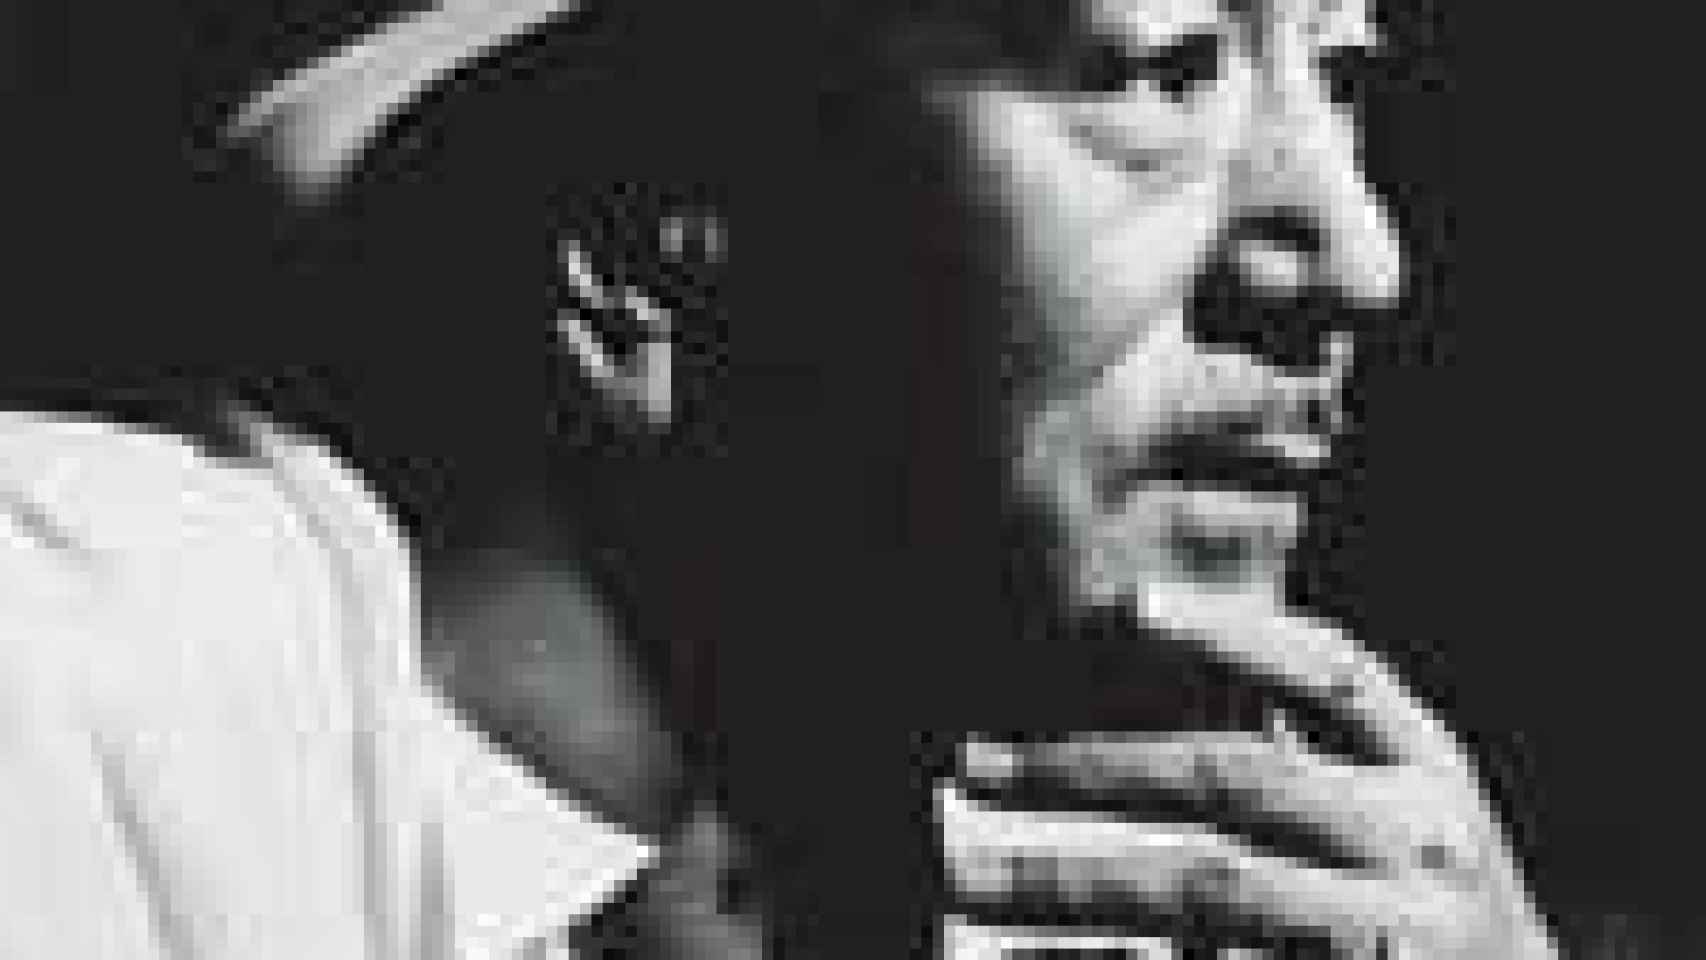 Image: Yasujiro Ozu tesoro de la humanidad